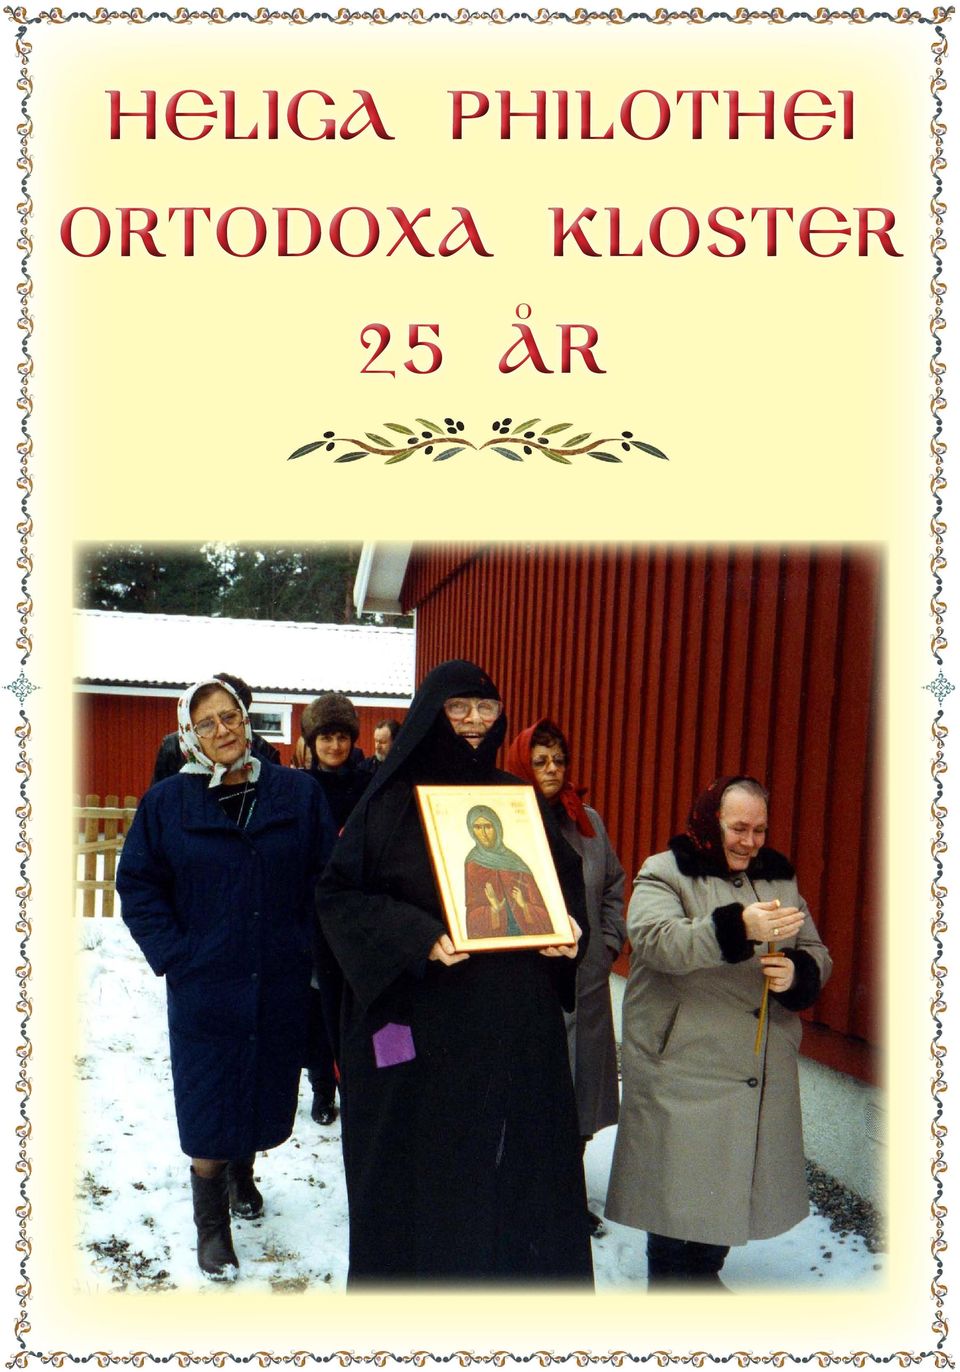 Ortodoxa